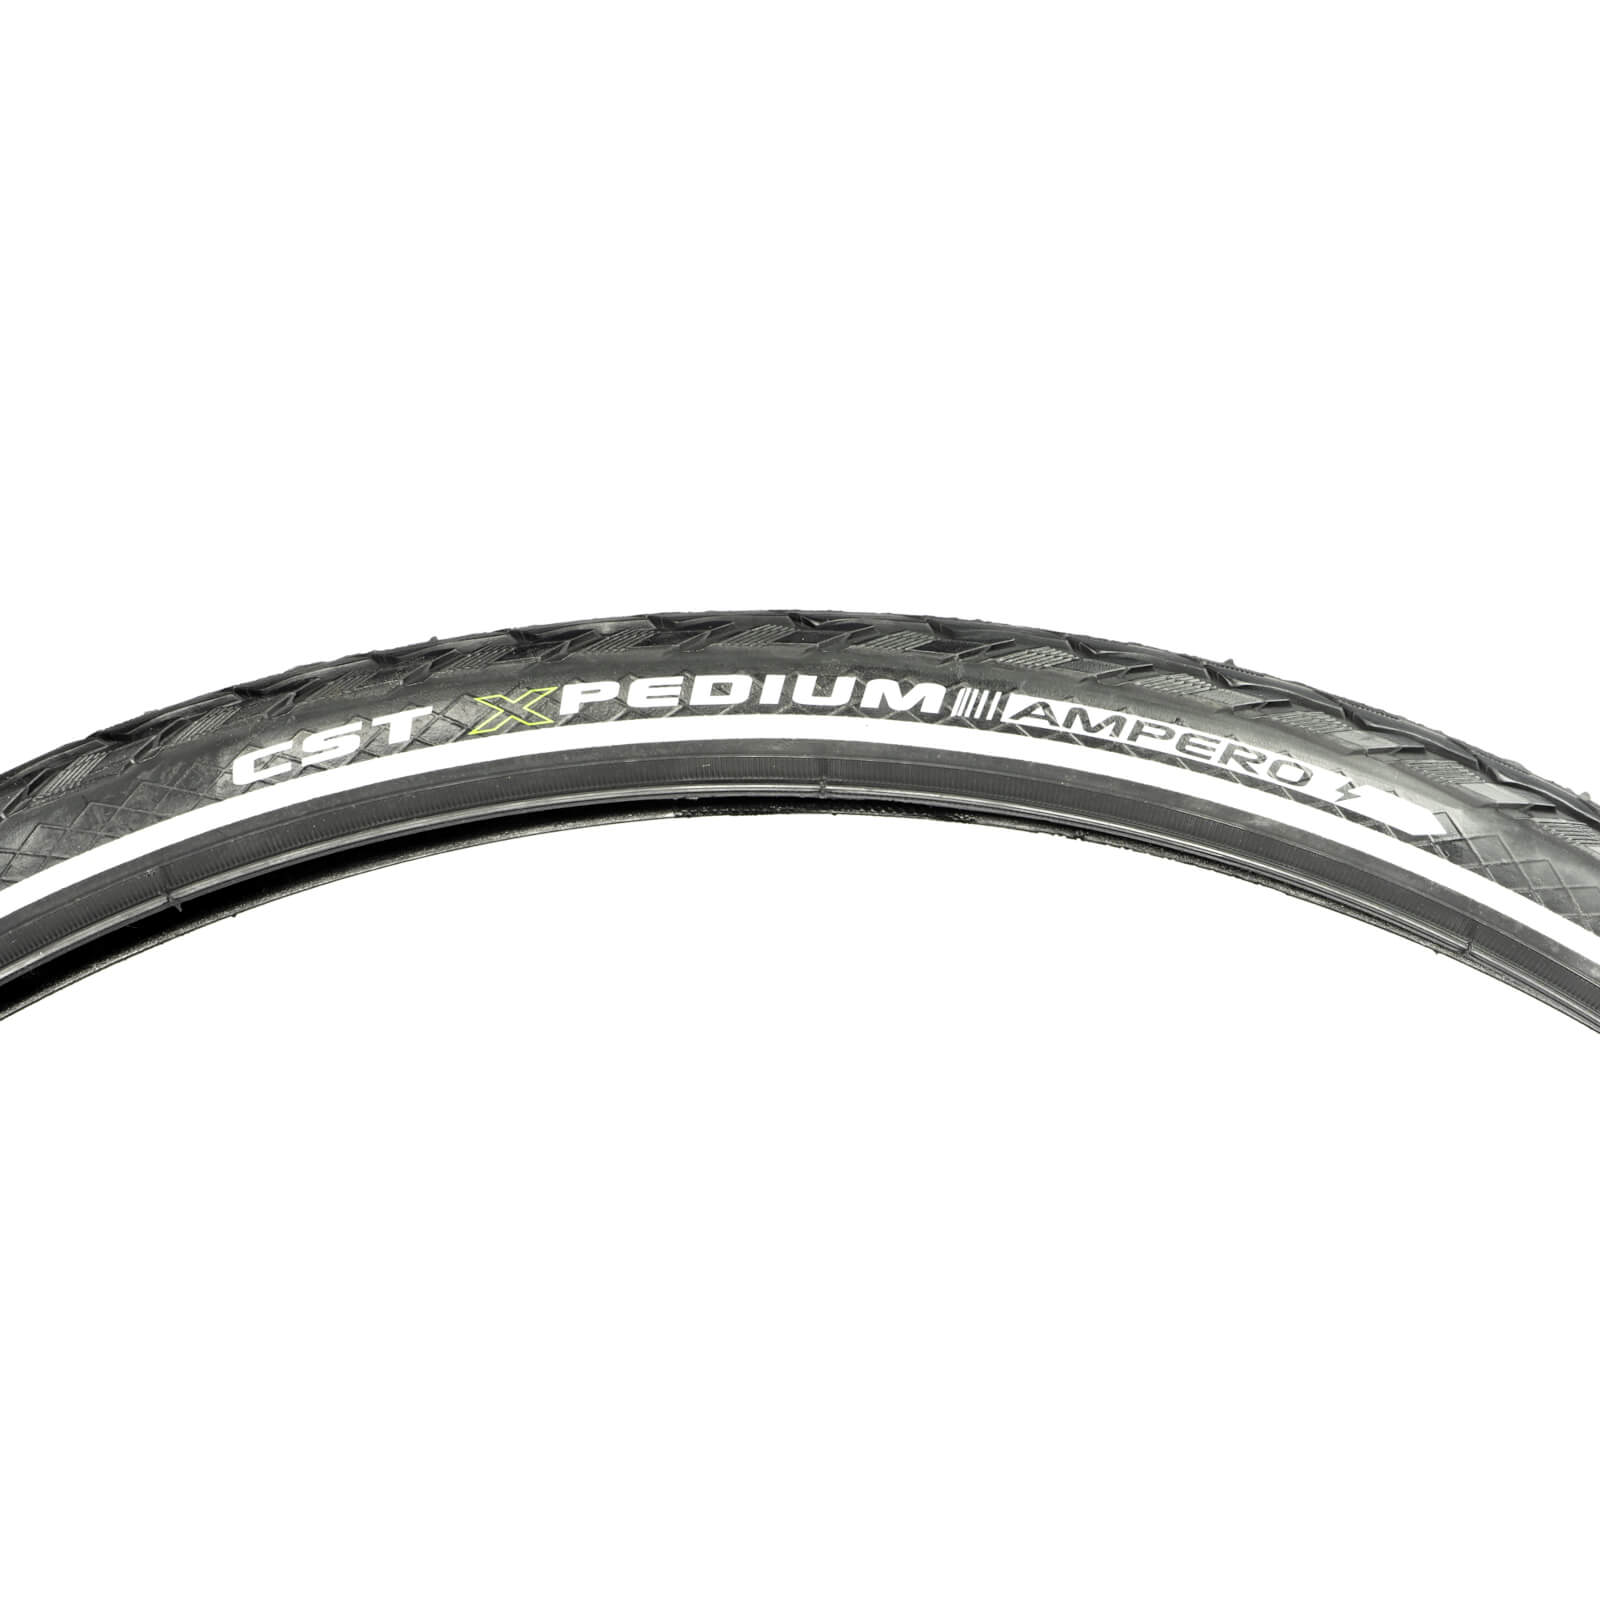 CST Xpedium Level 3 Single Compound Wire EPS 700c Clincher Bike Tyre 700x35c